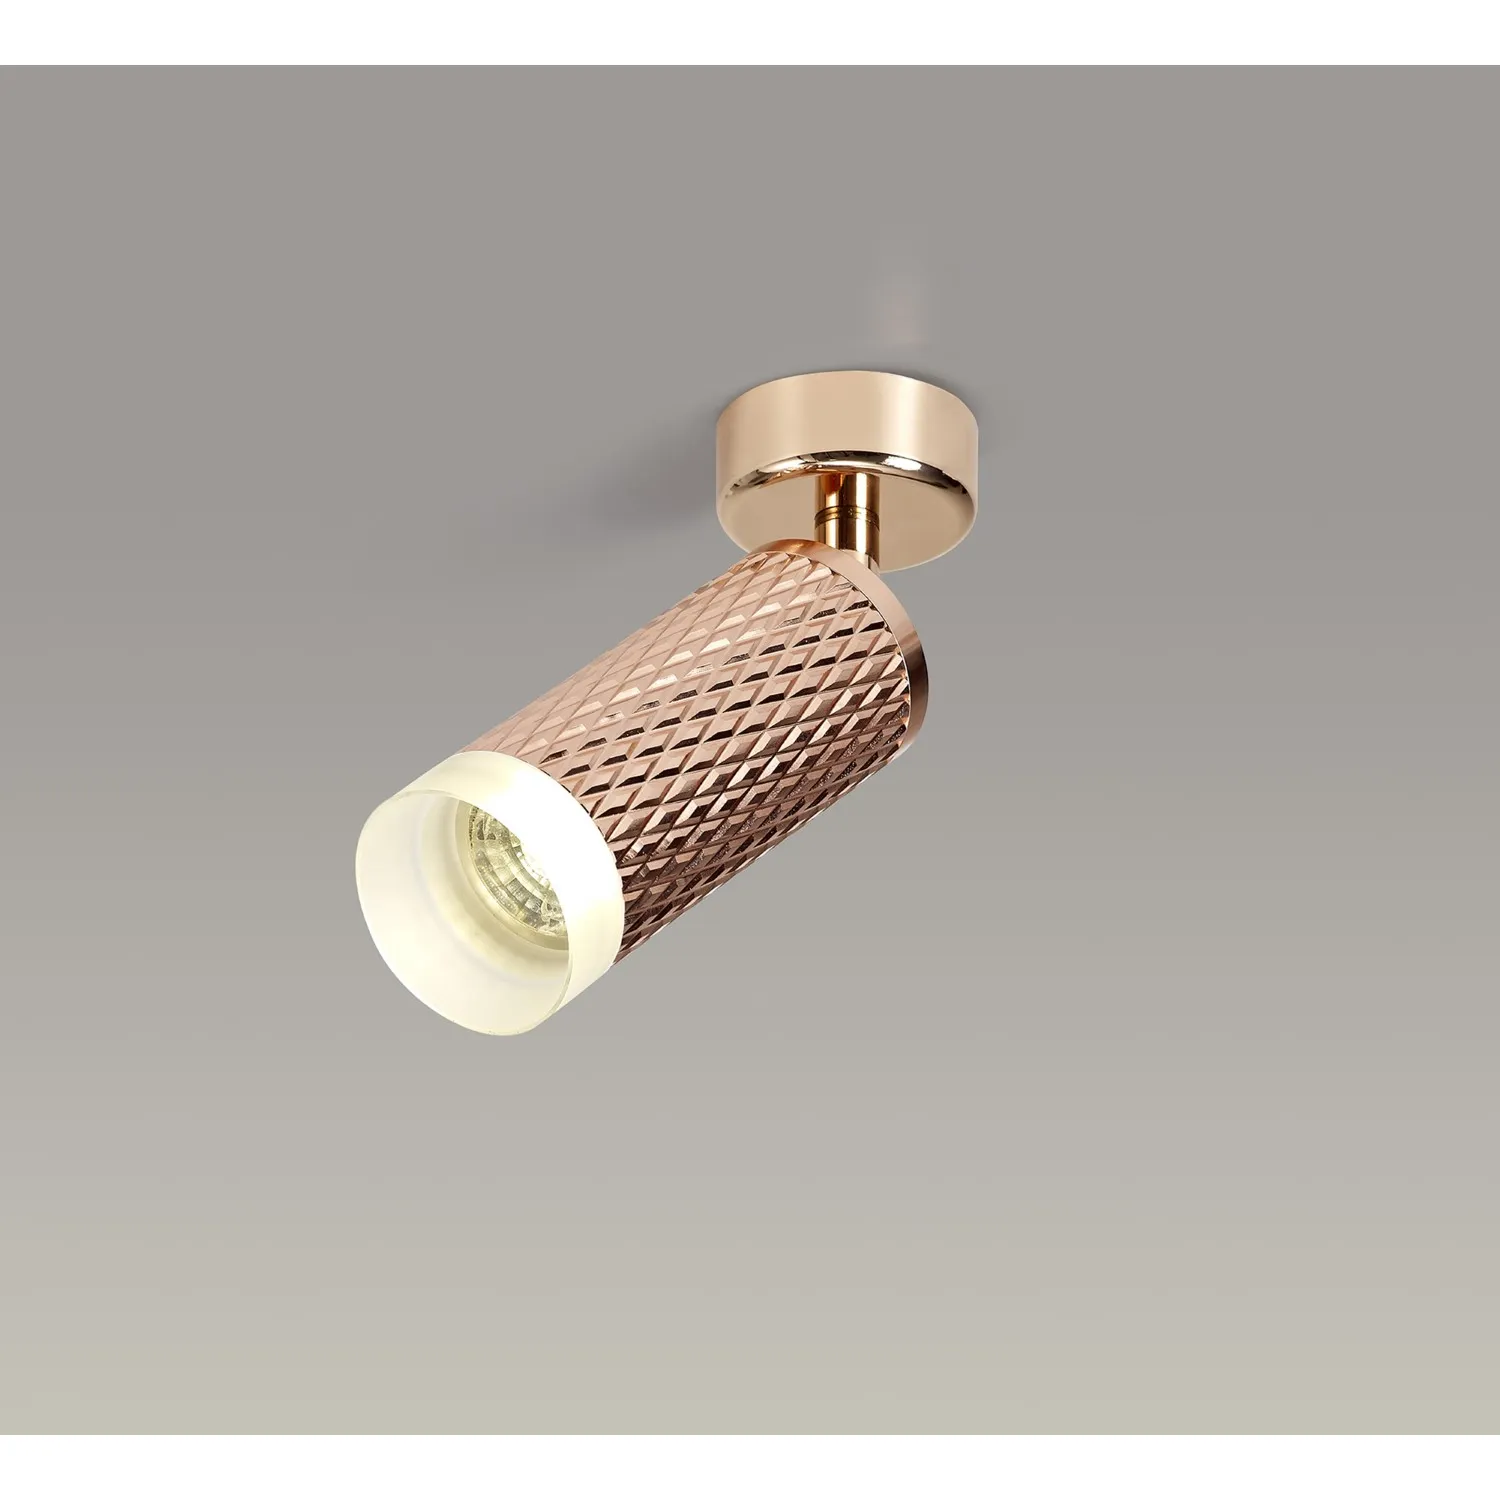 Lenham Adjustable 1 Light Surface Mounted Ceiling Wall Spot Light GU10, Rose Gold Acrylic Ring